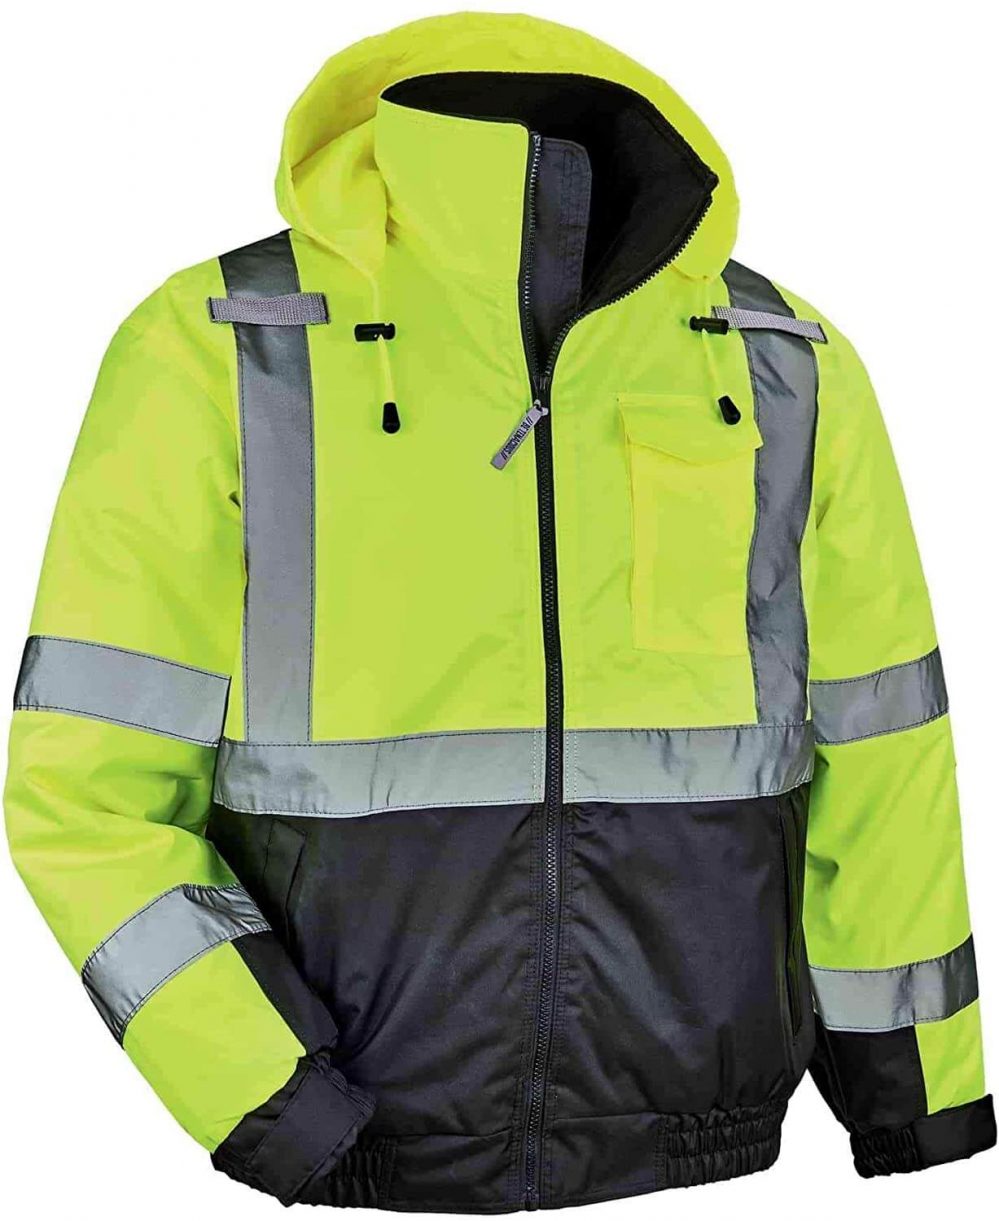 ergodyne-glowear-high-visibility-reflective-winter-bomber-jacket